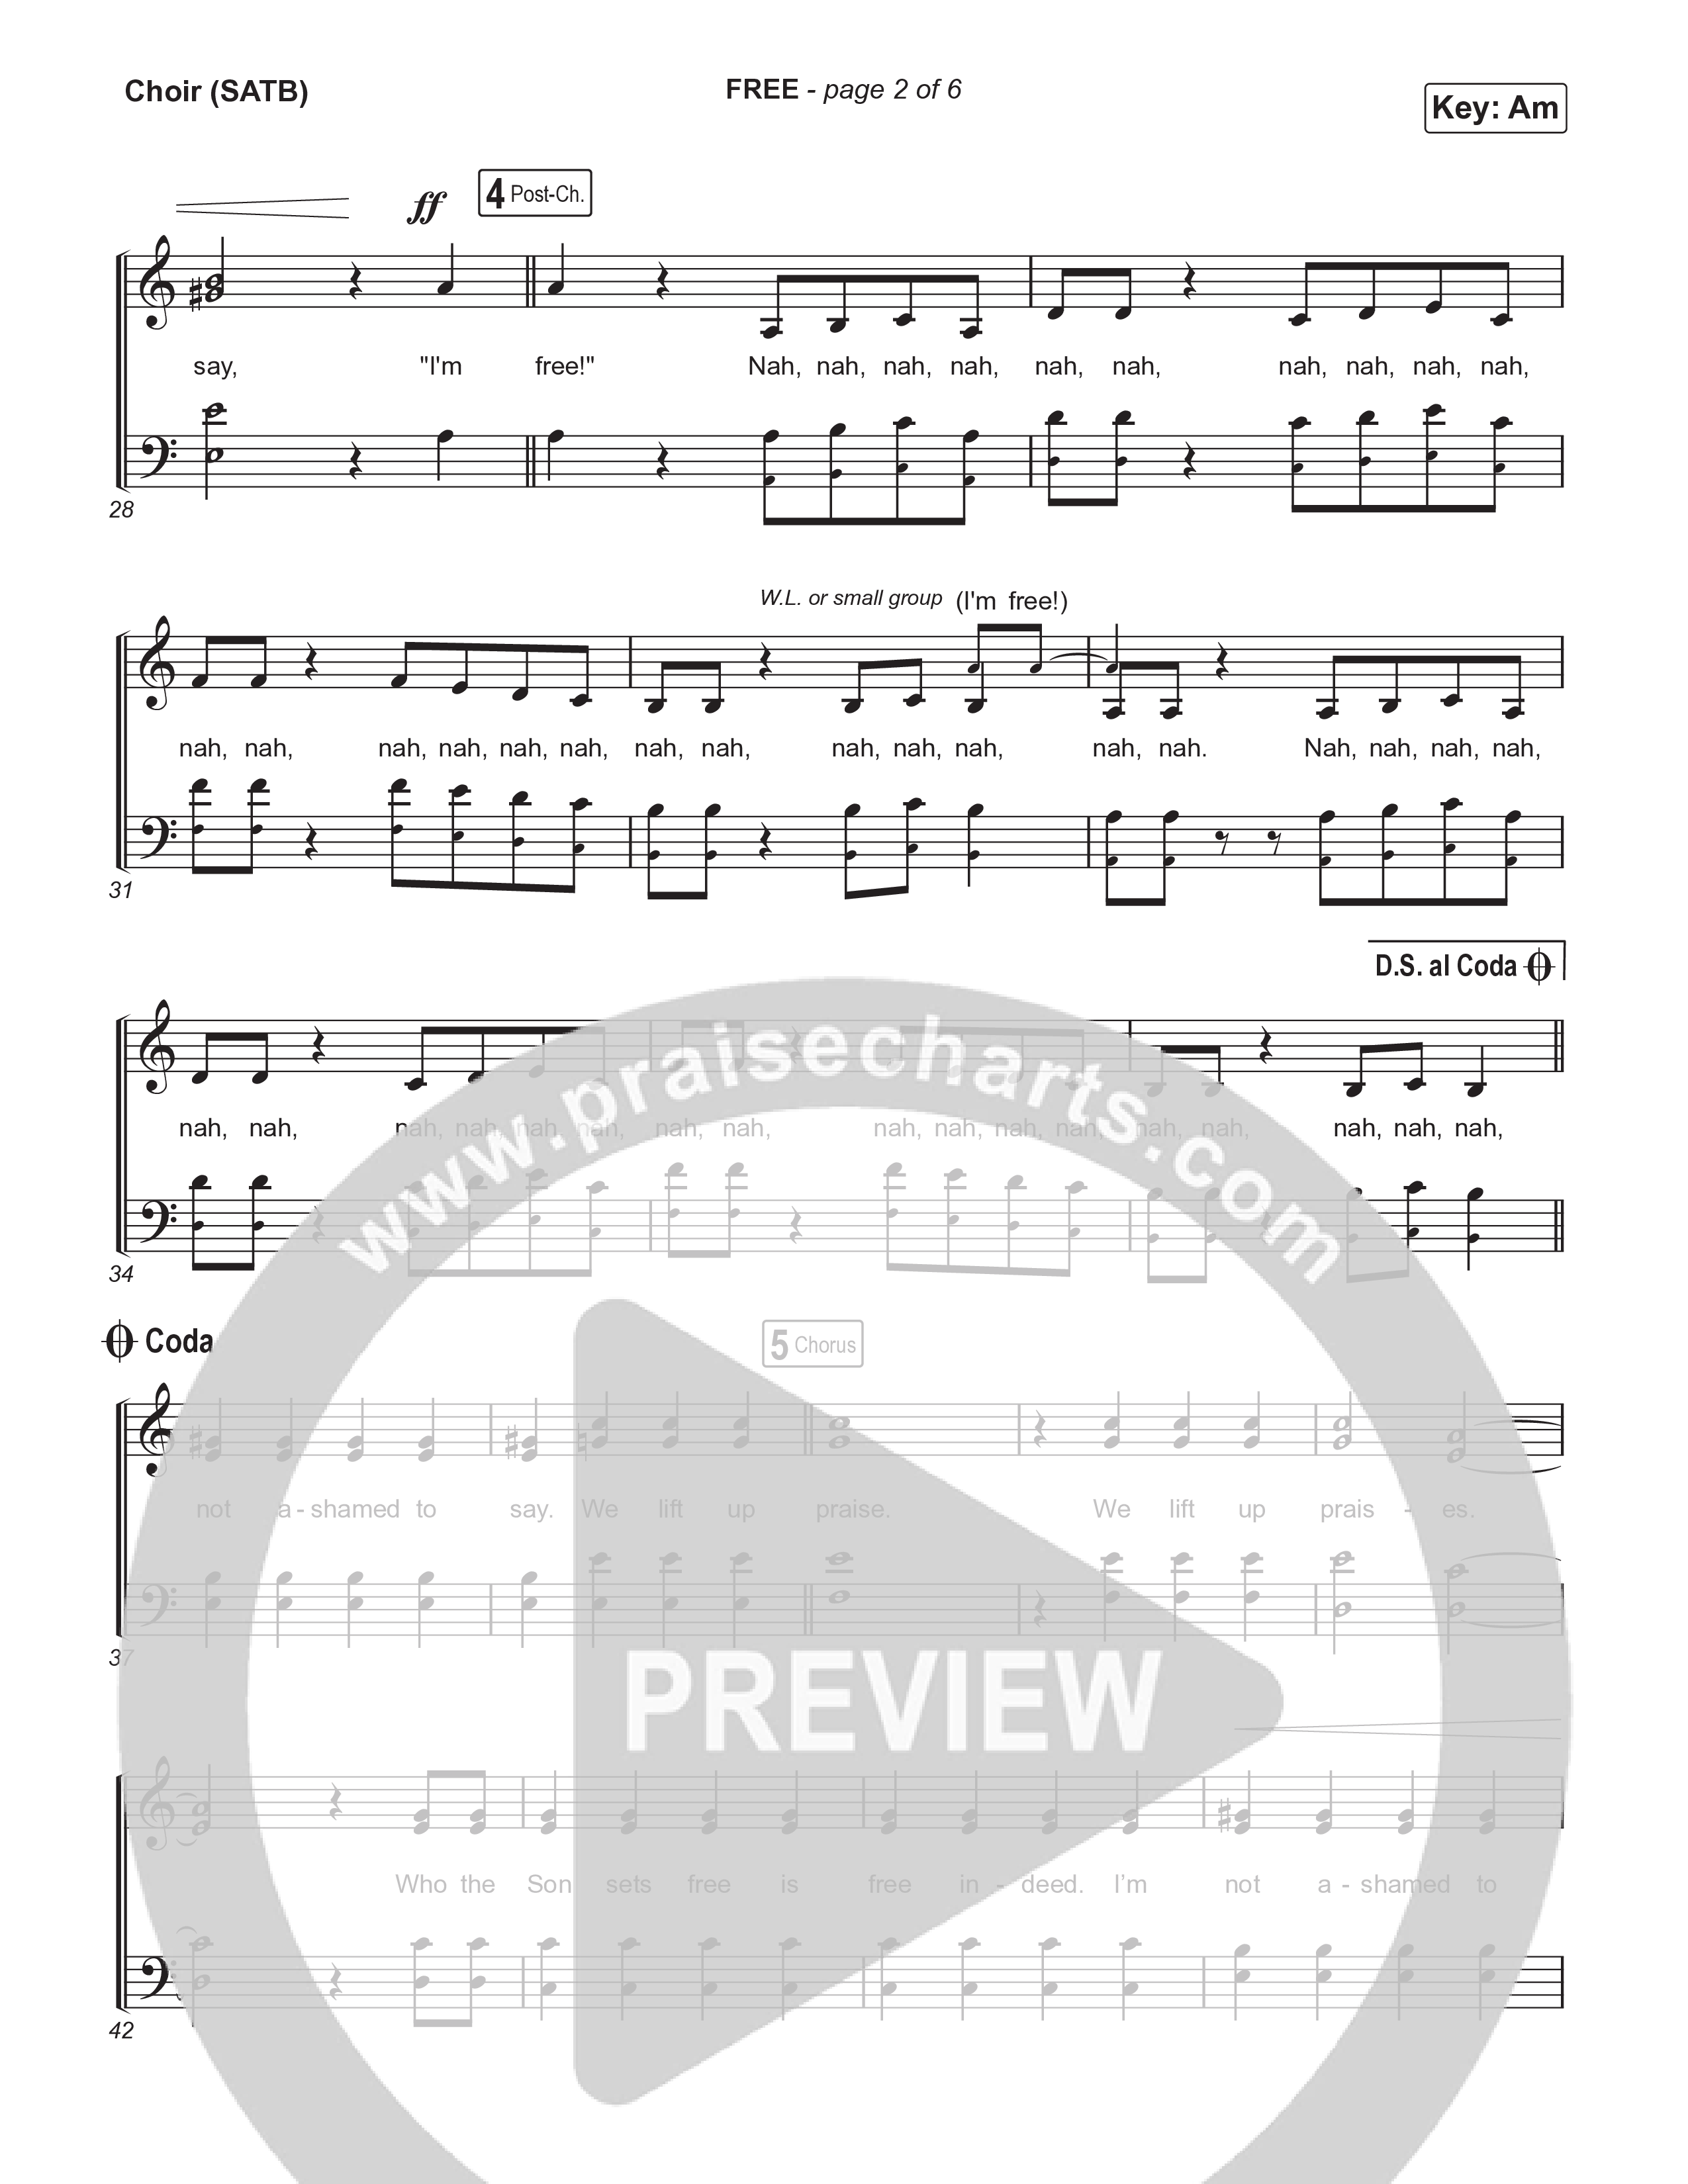 FREE Choir Sheet (SATB) (SEU Worship)